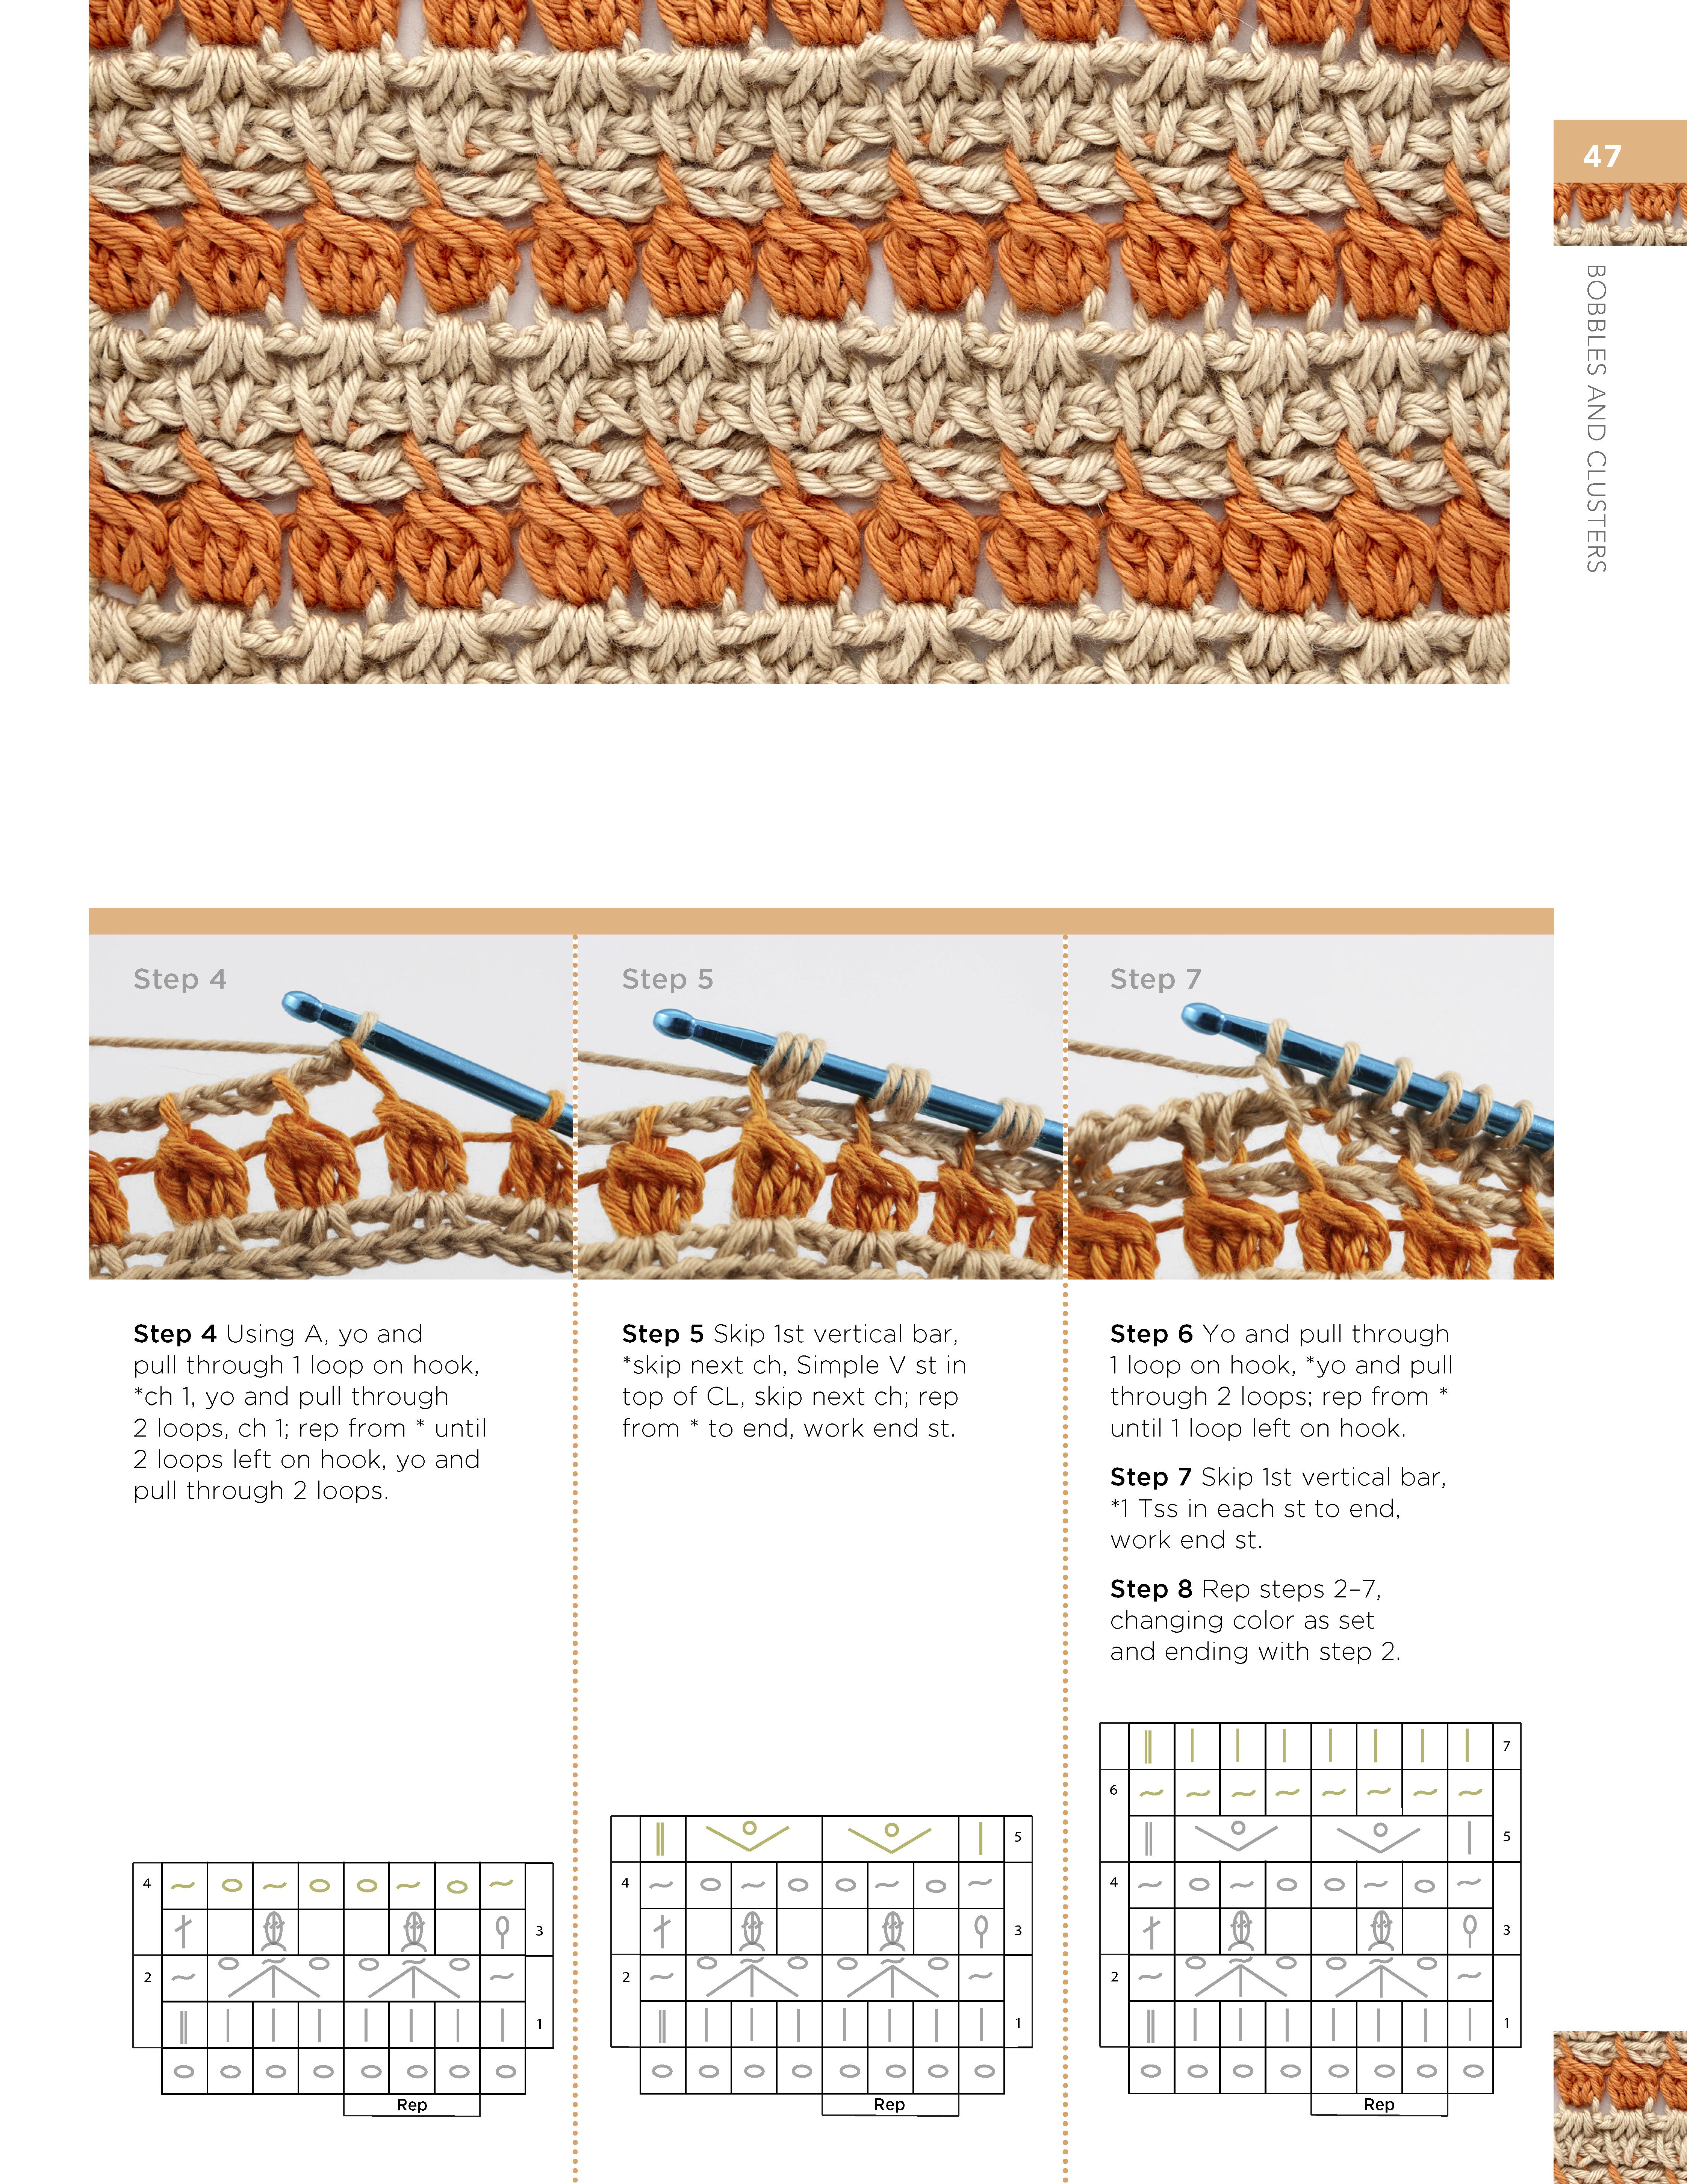 Crochet Stitch Dictionary  Crochet stitches dictionary, Crochet stitches,  Crochet instructions